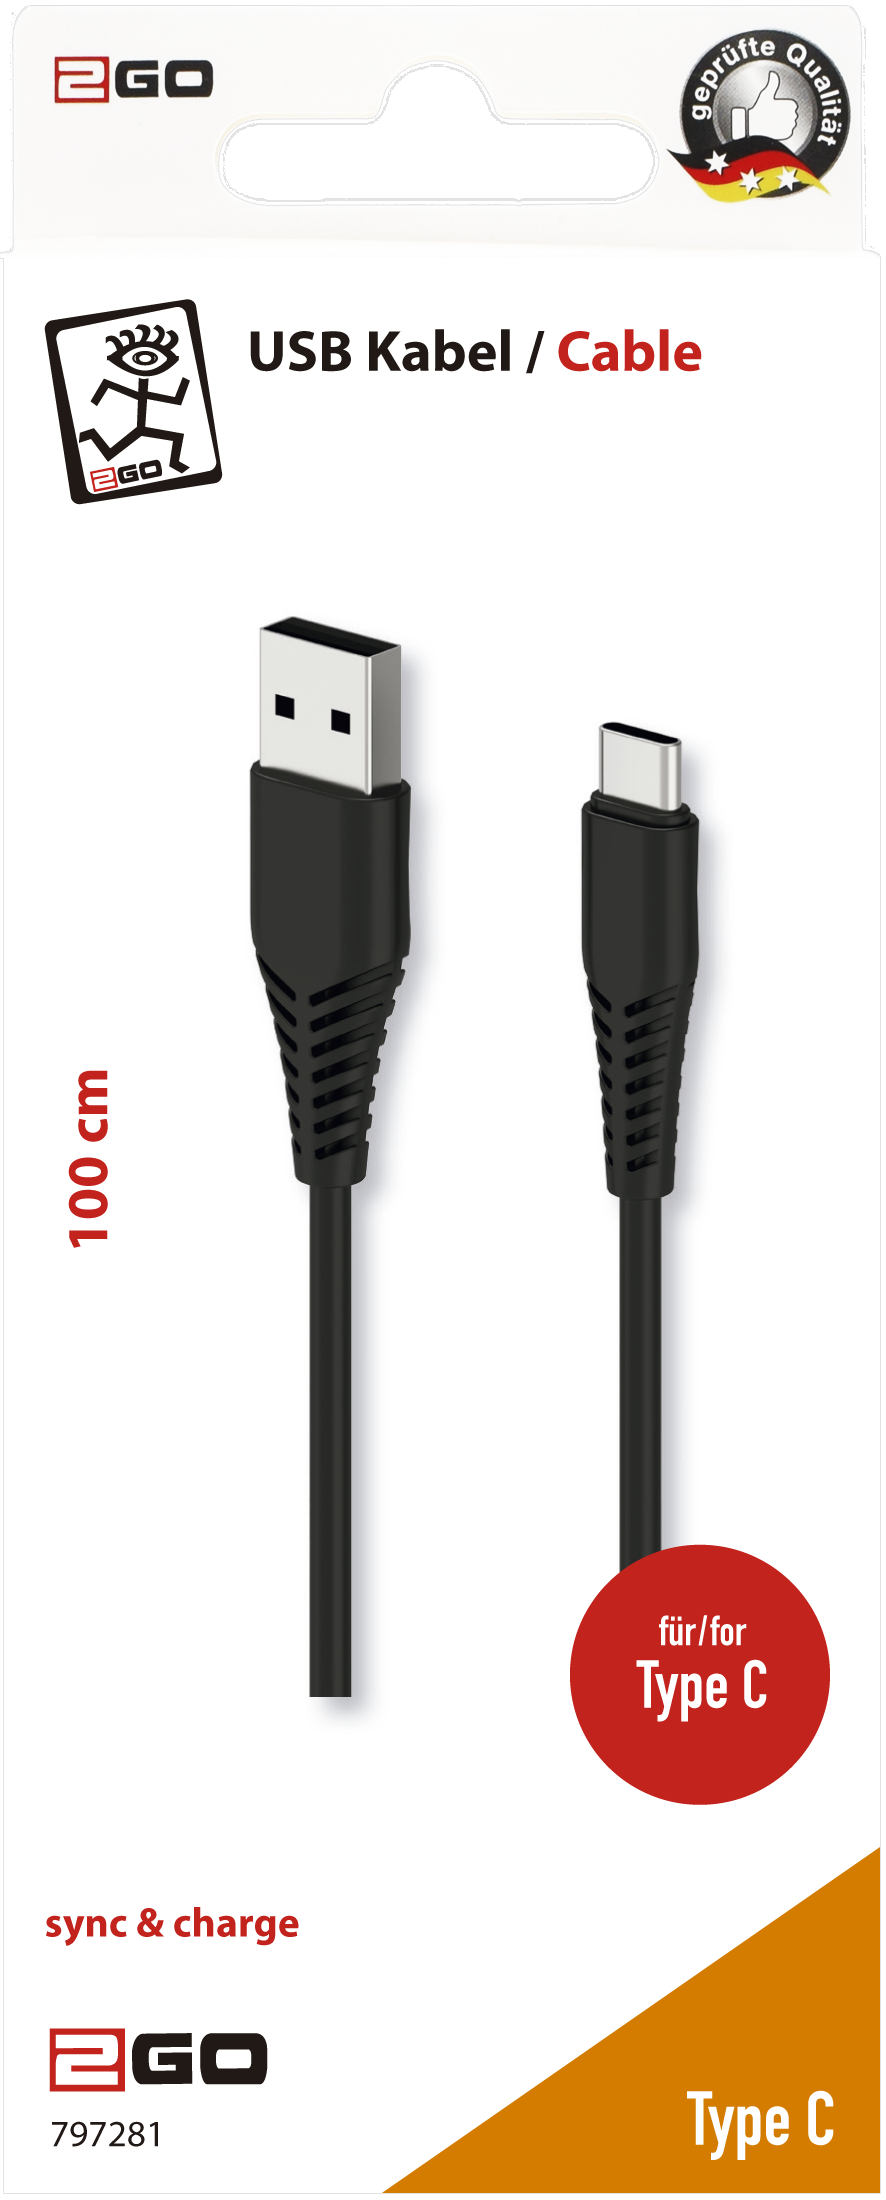 2GO Cable USB-Type C 1m black